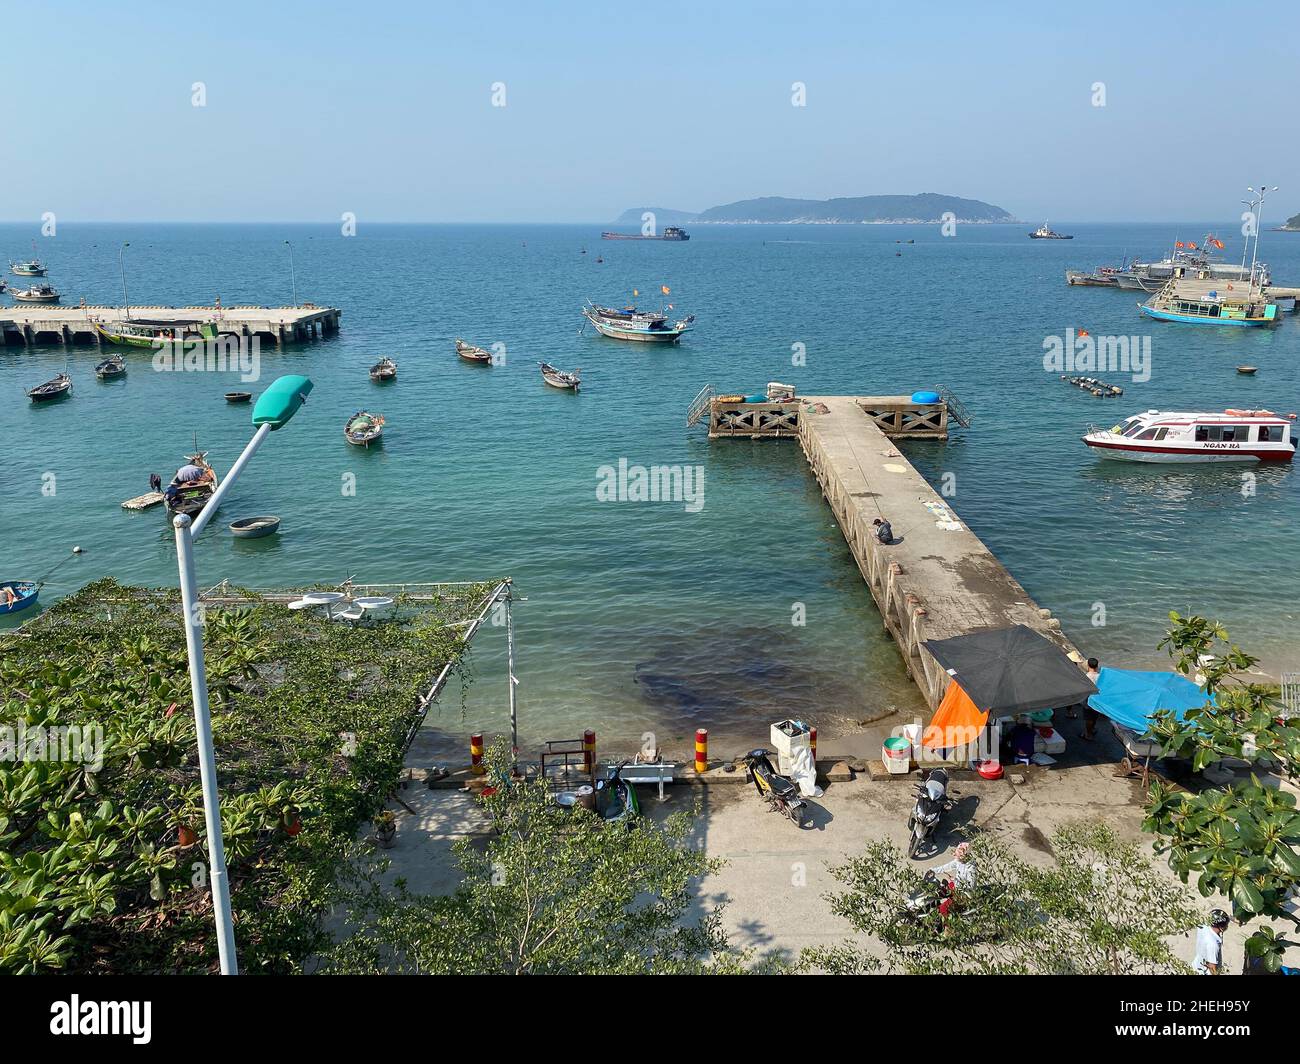 Quang Nam, Vietnam - Apr 14, 2021. Seascape of Cu Lao Cham Island, Vietnam. The beautiful island is located 120km from Hoi An, an interesting destinat Stock Photo